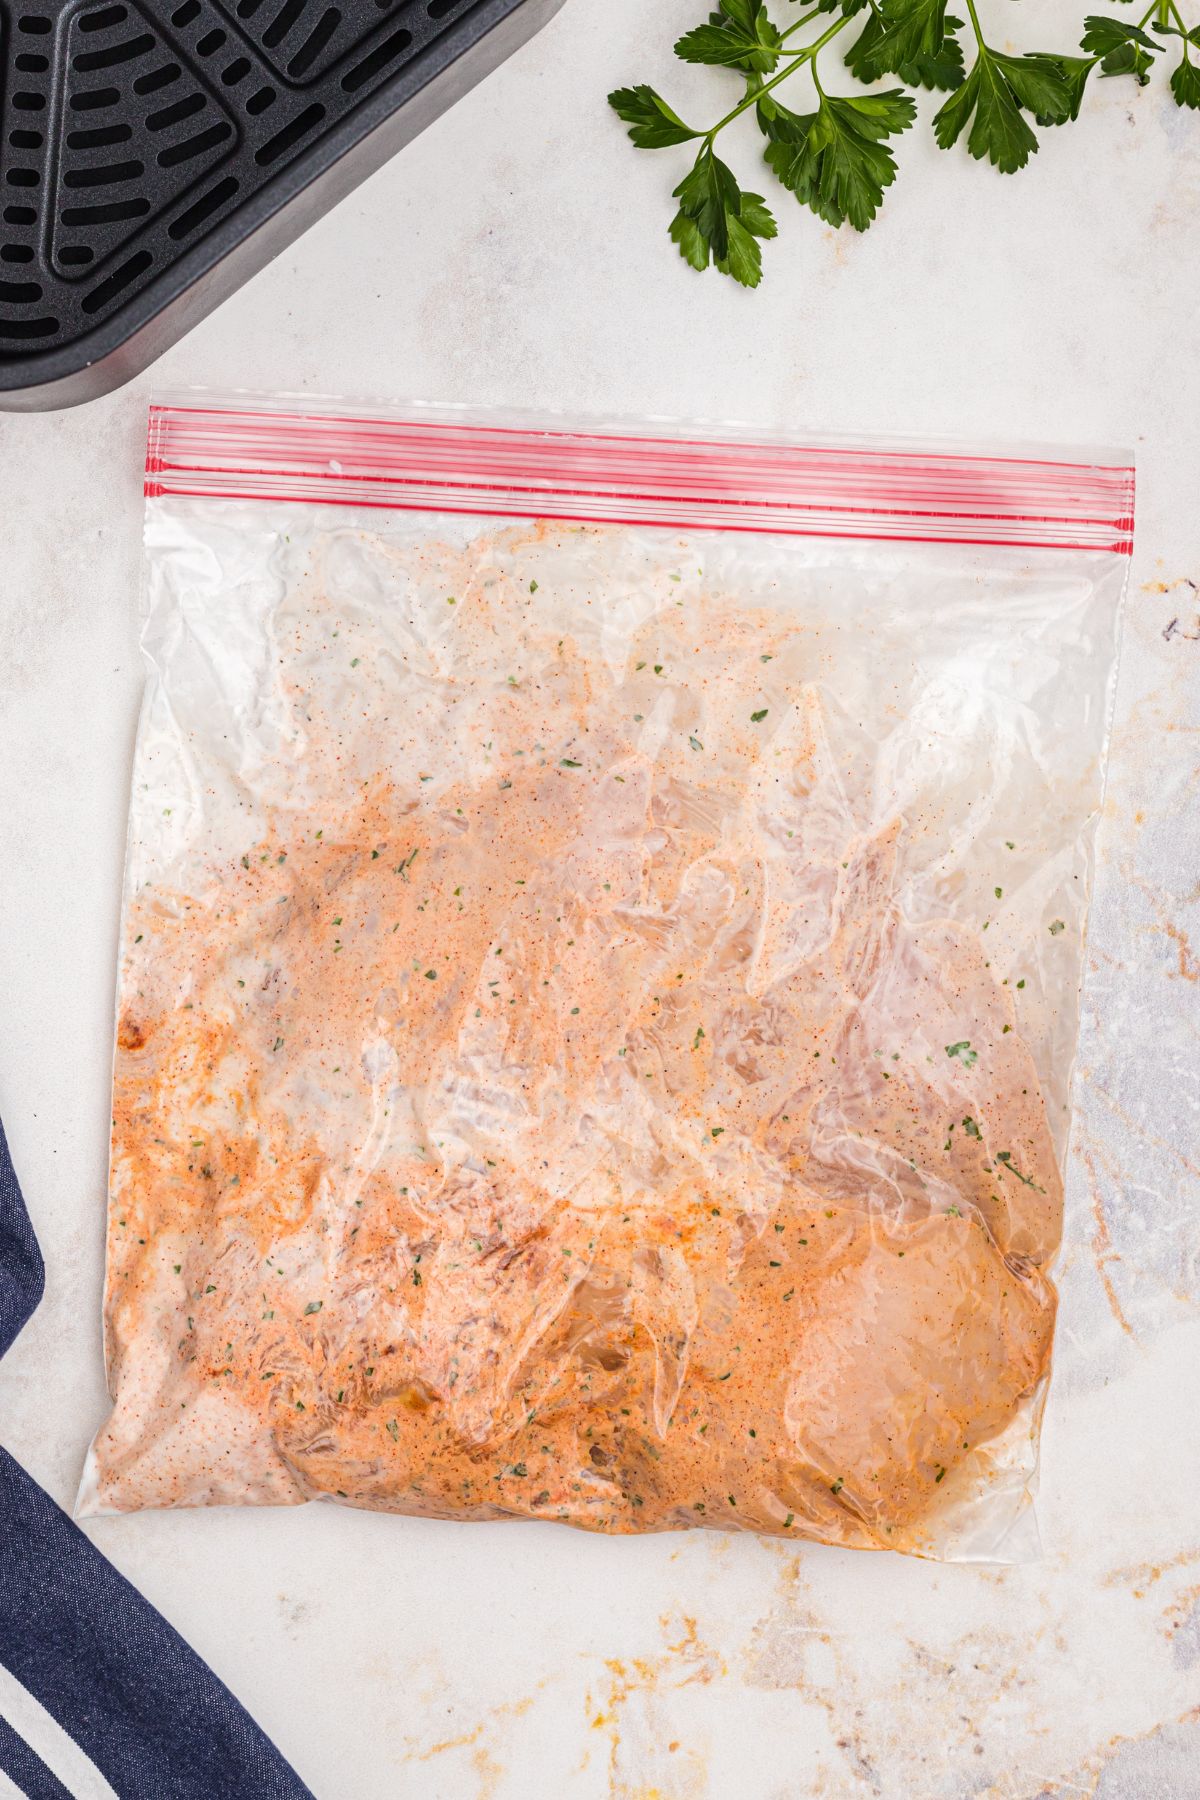 Ziploc bag filled with uncooked chicken breast, yogurt, and seasonings.